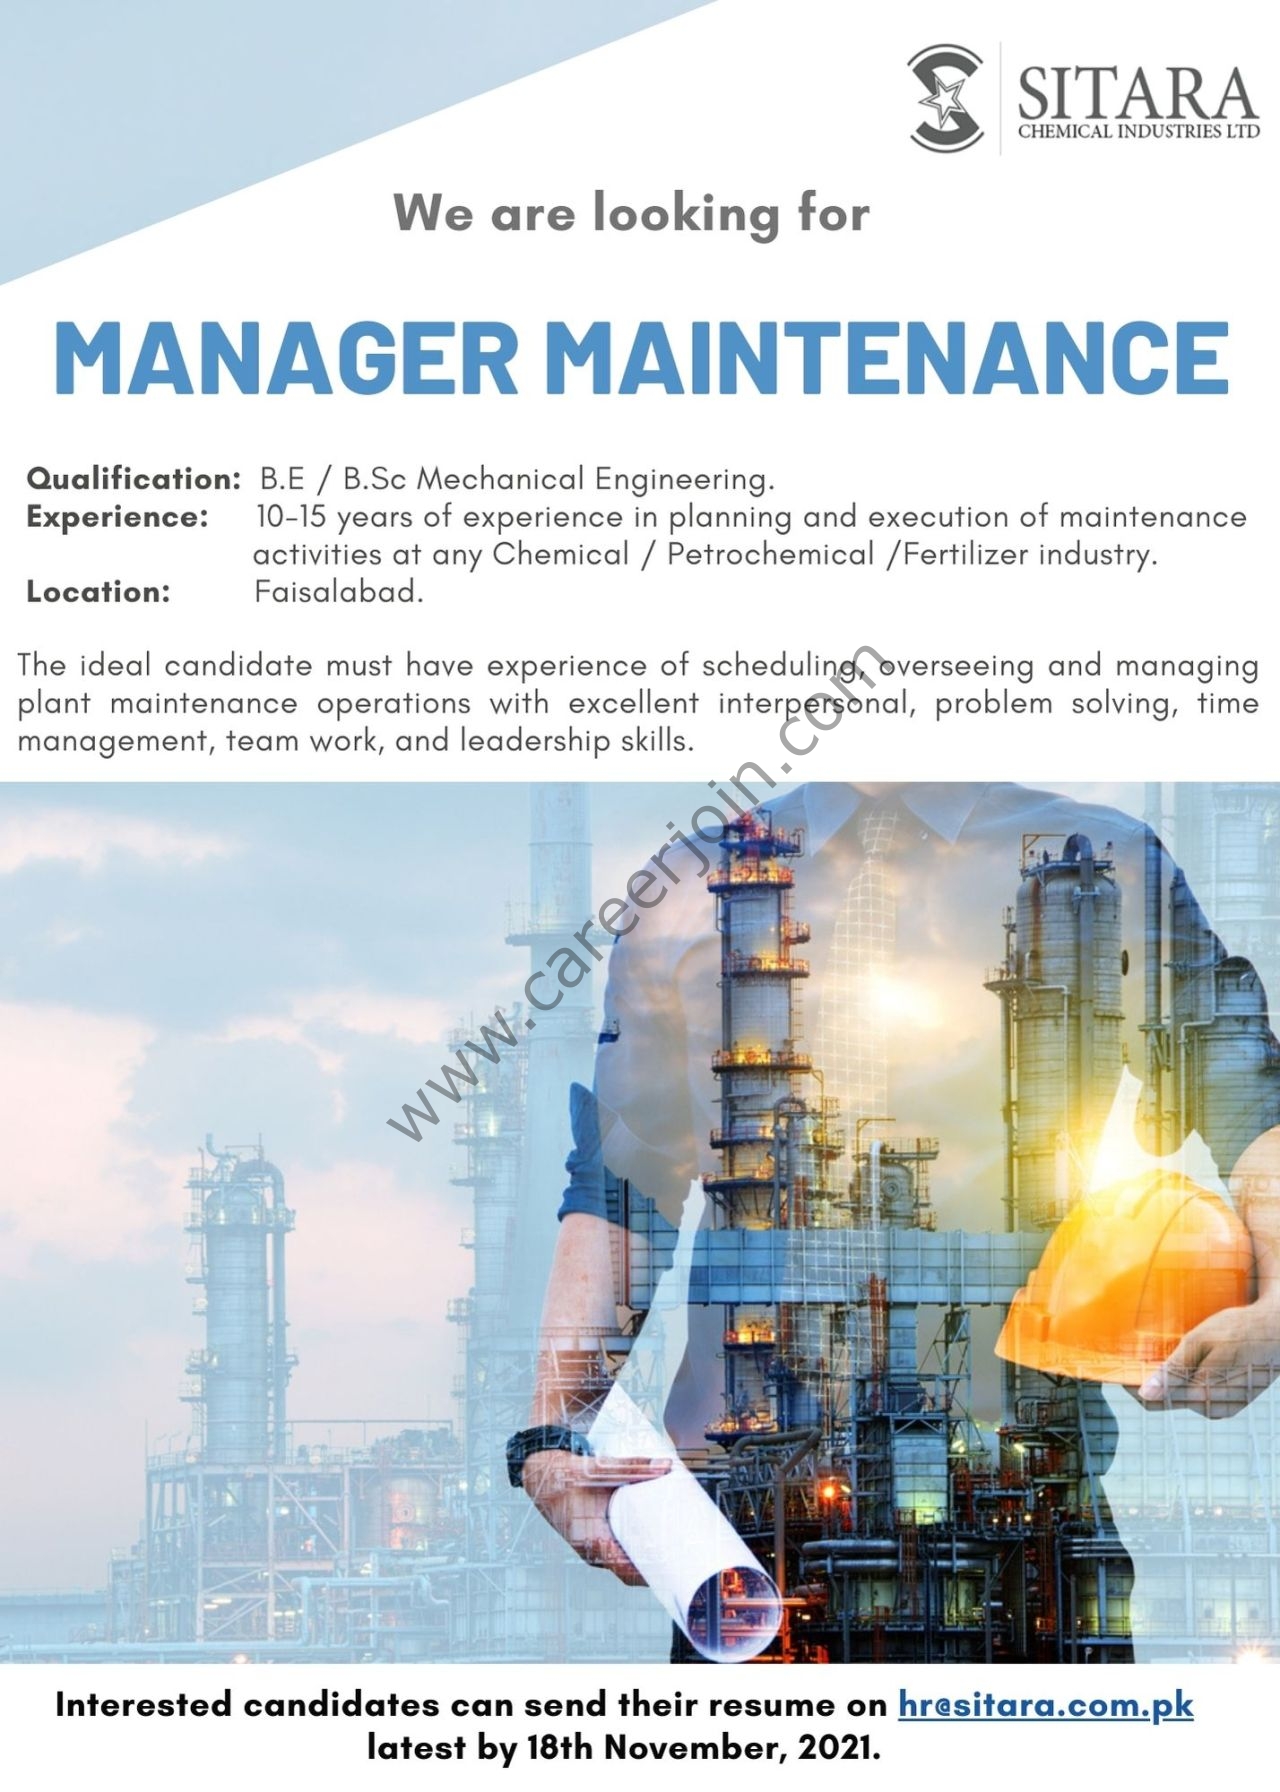 Sitara Chemical Industries Ltd Jobs Manager Maintenance